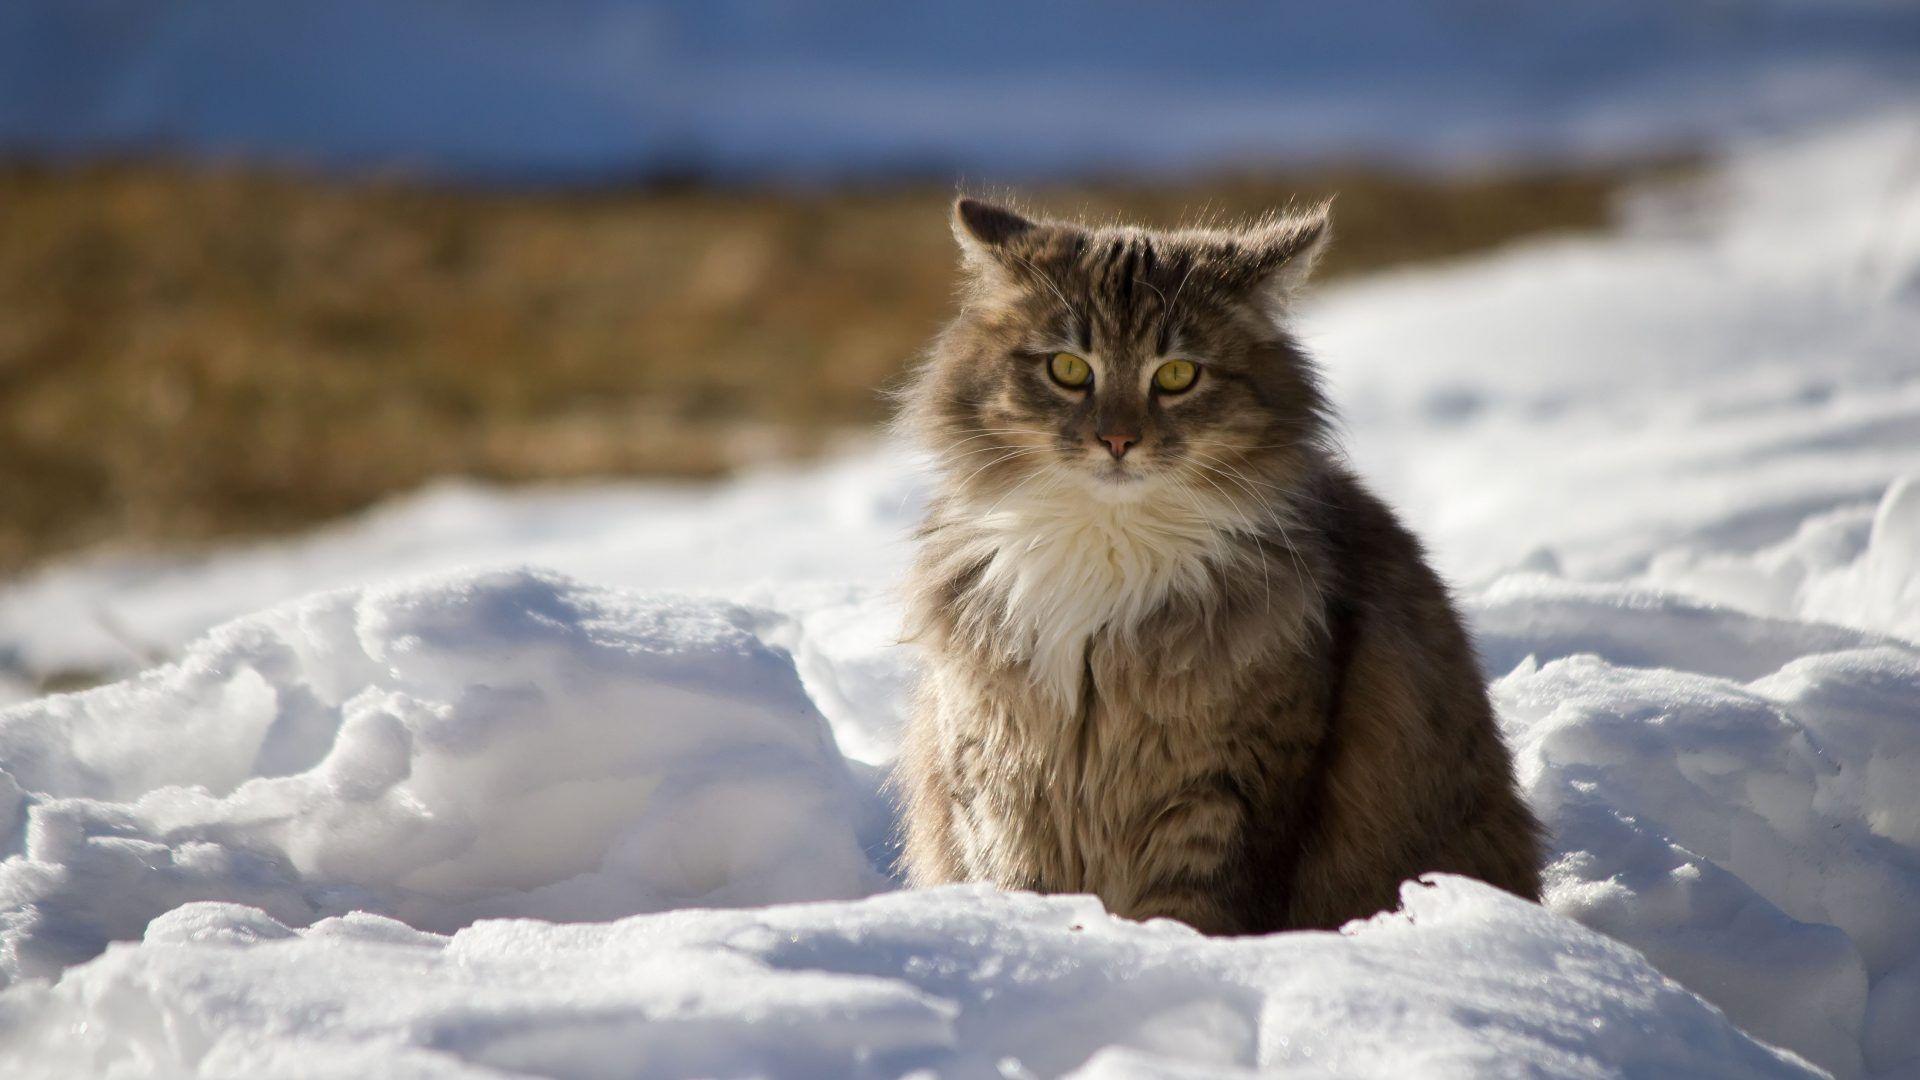 Winter Tag wallpaper: Winter Snow Animals Lynx Cats